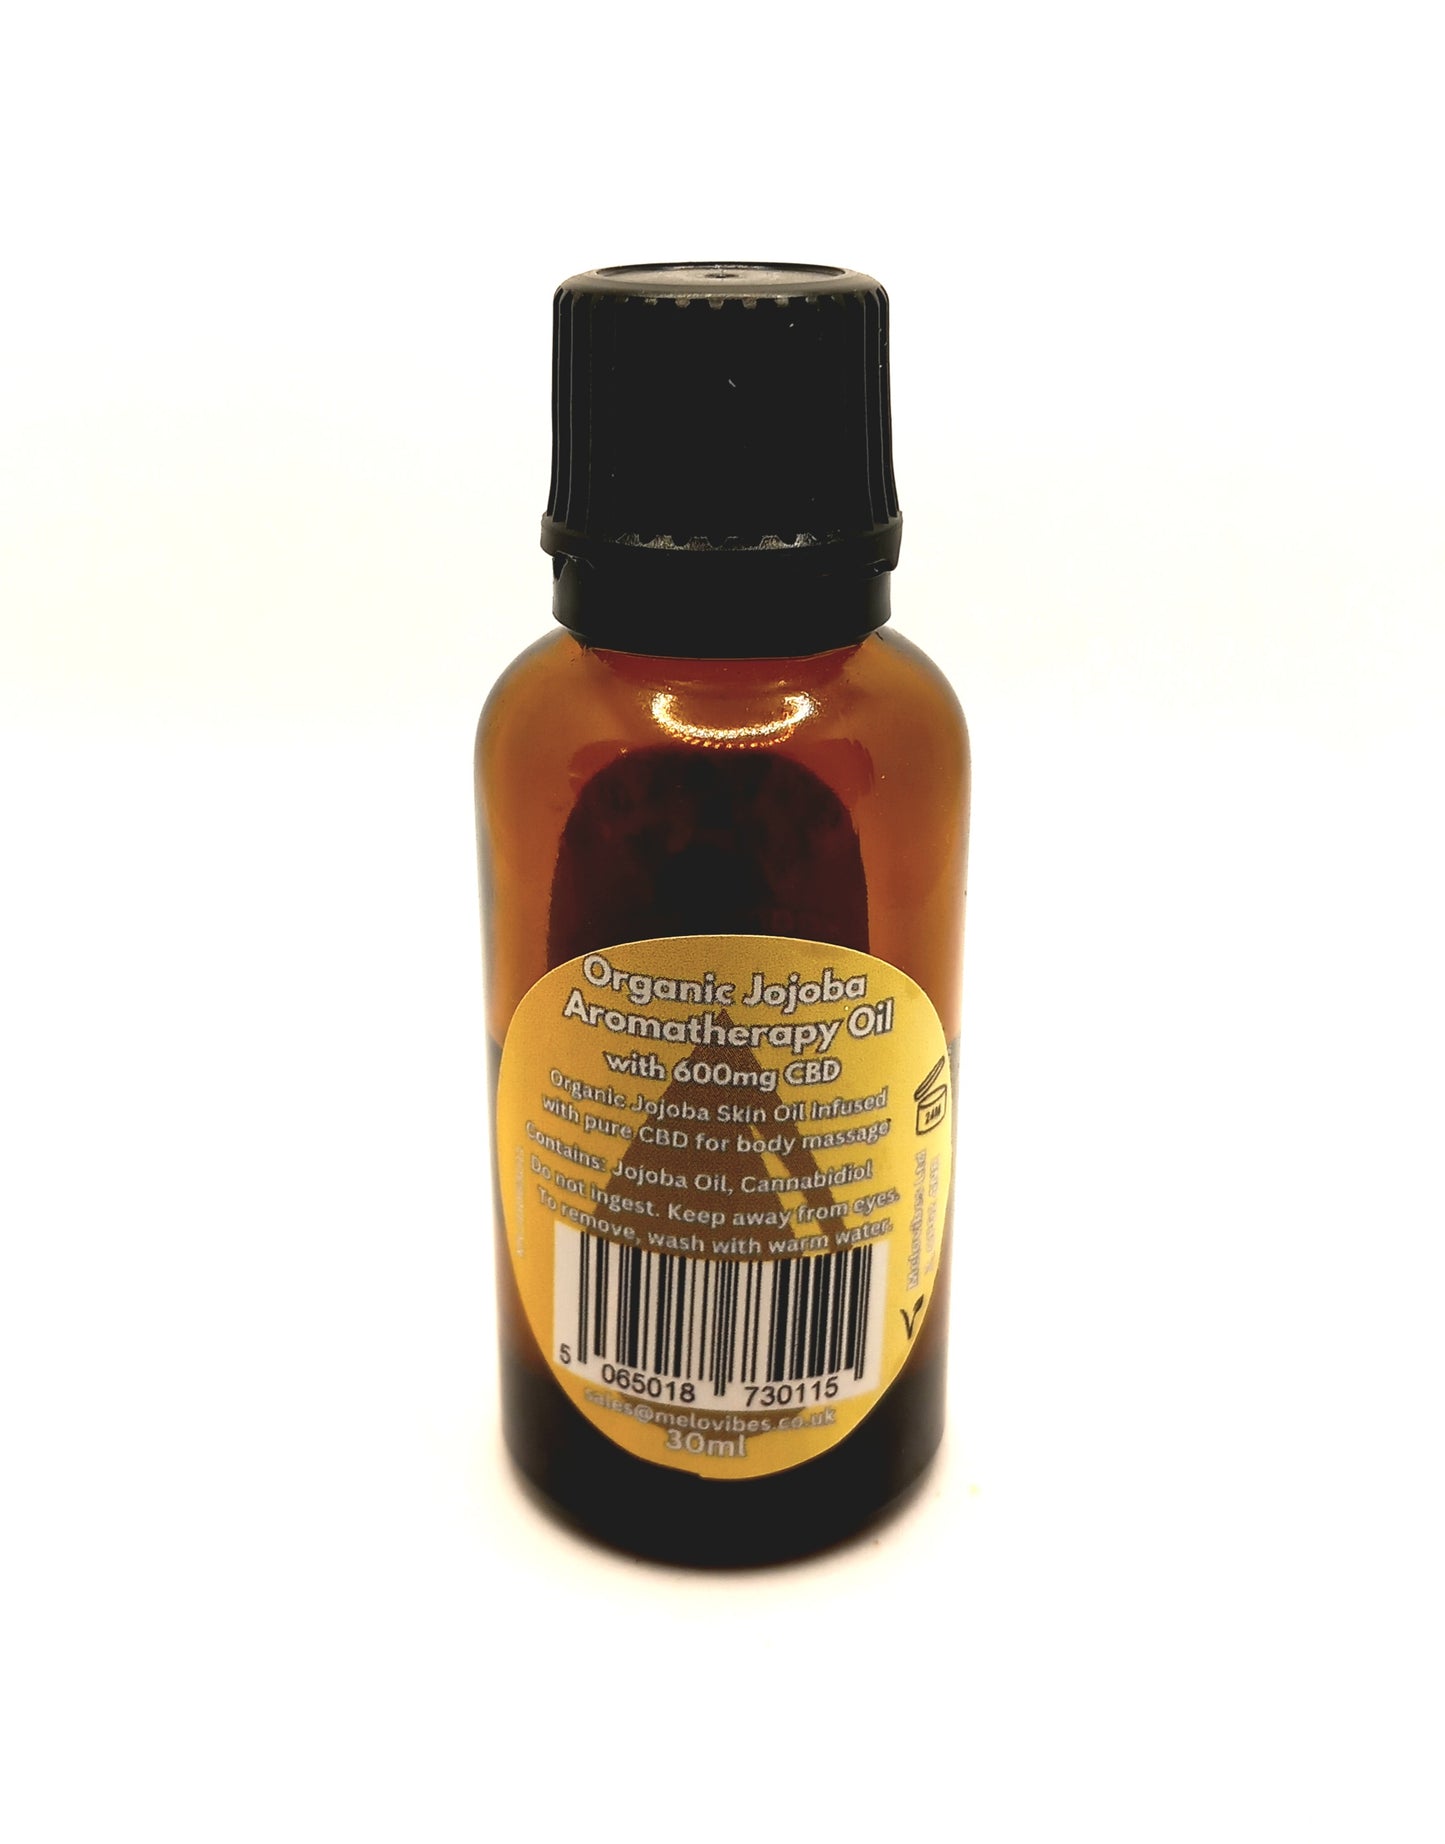 Melovibes Organic Jojoba Aromatherapy Oil with 600mg CBD - 30ml bottle - Hydrating Skin Oil